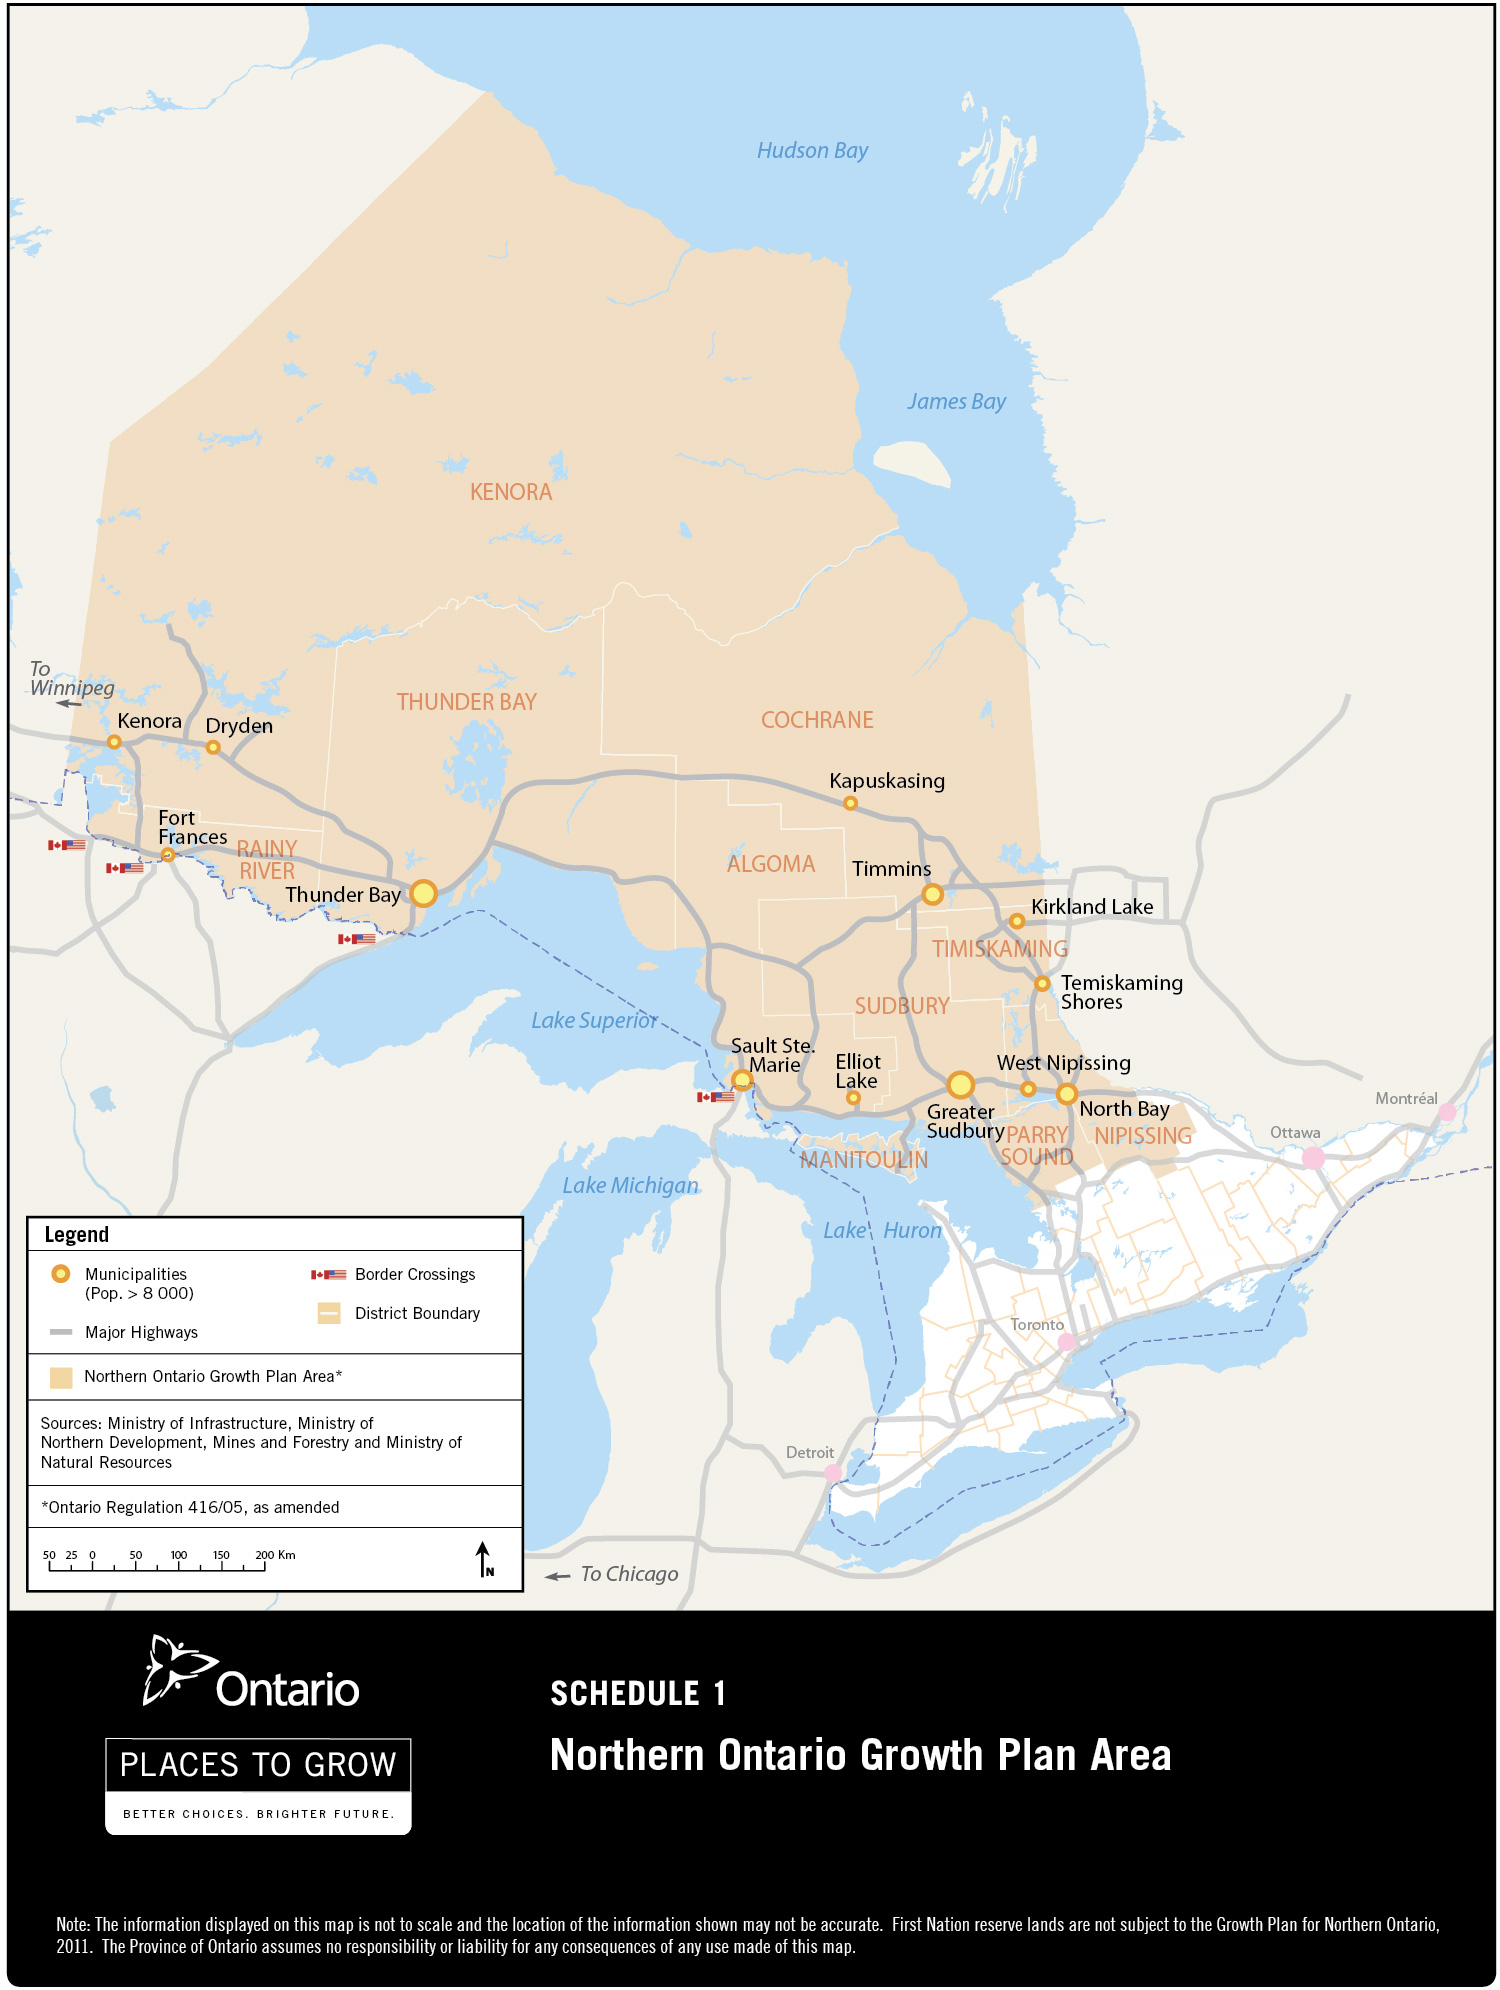 Northern Ontario Growth Plan Area